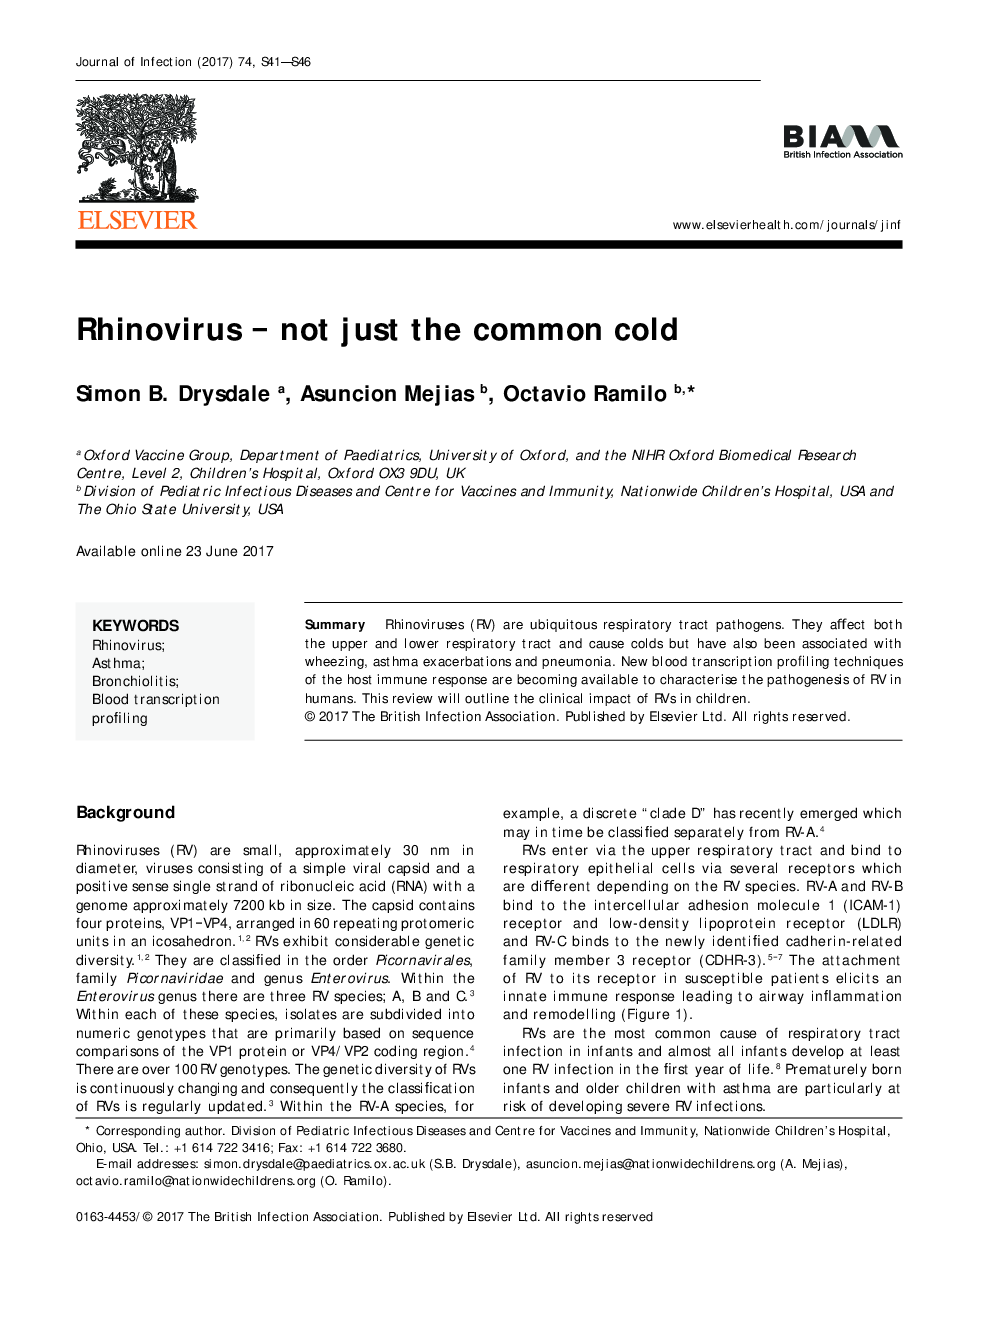 Rhinovirus - not just the common cold